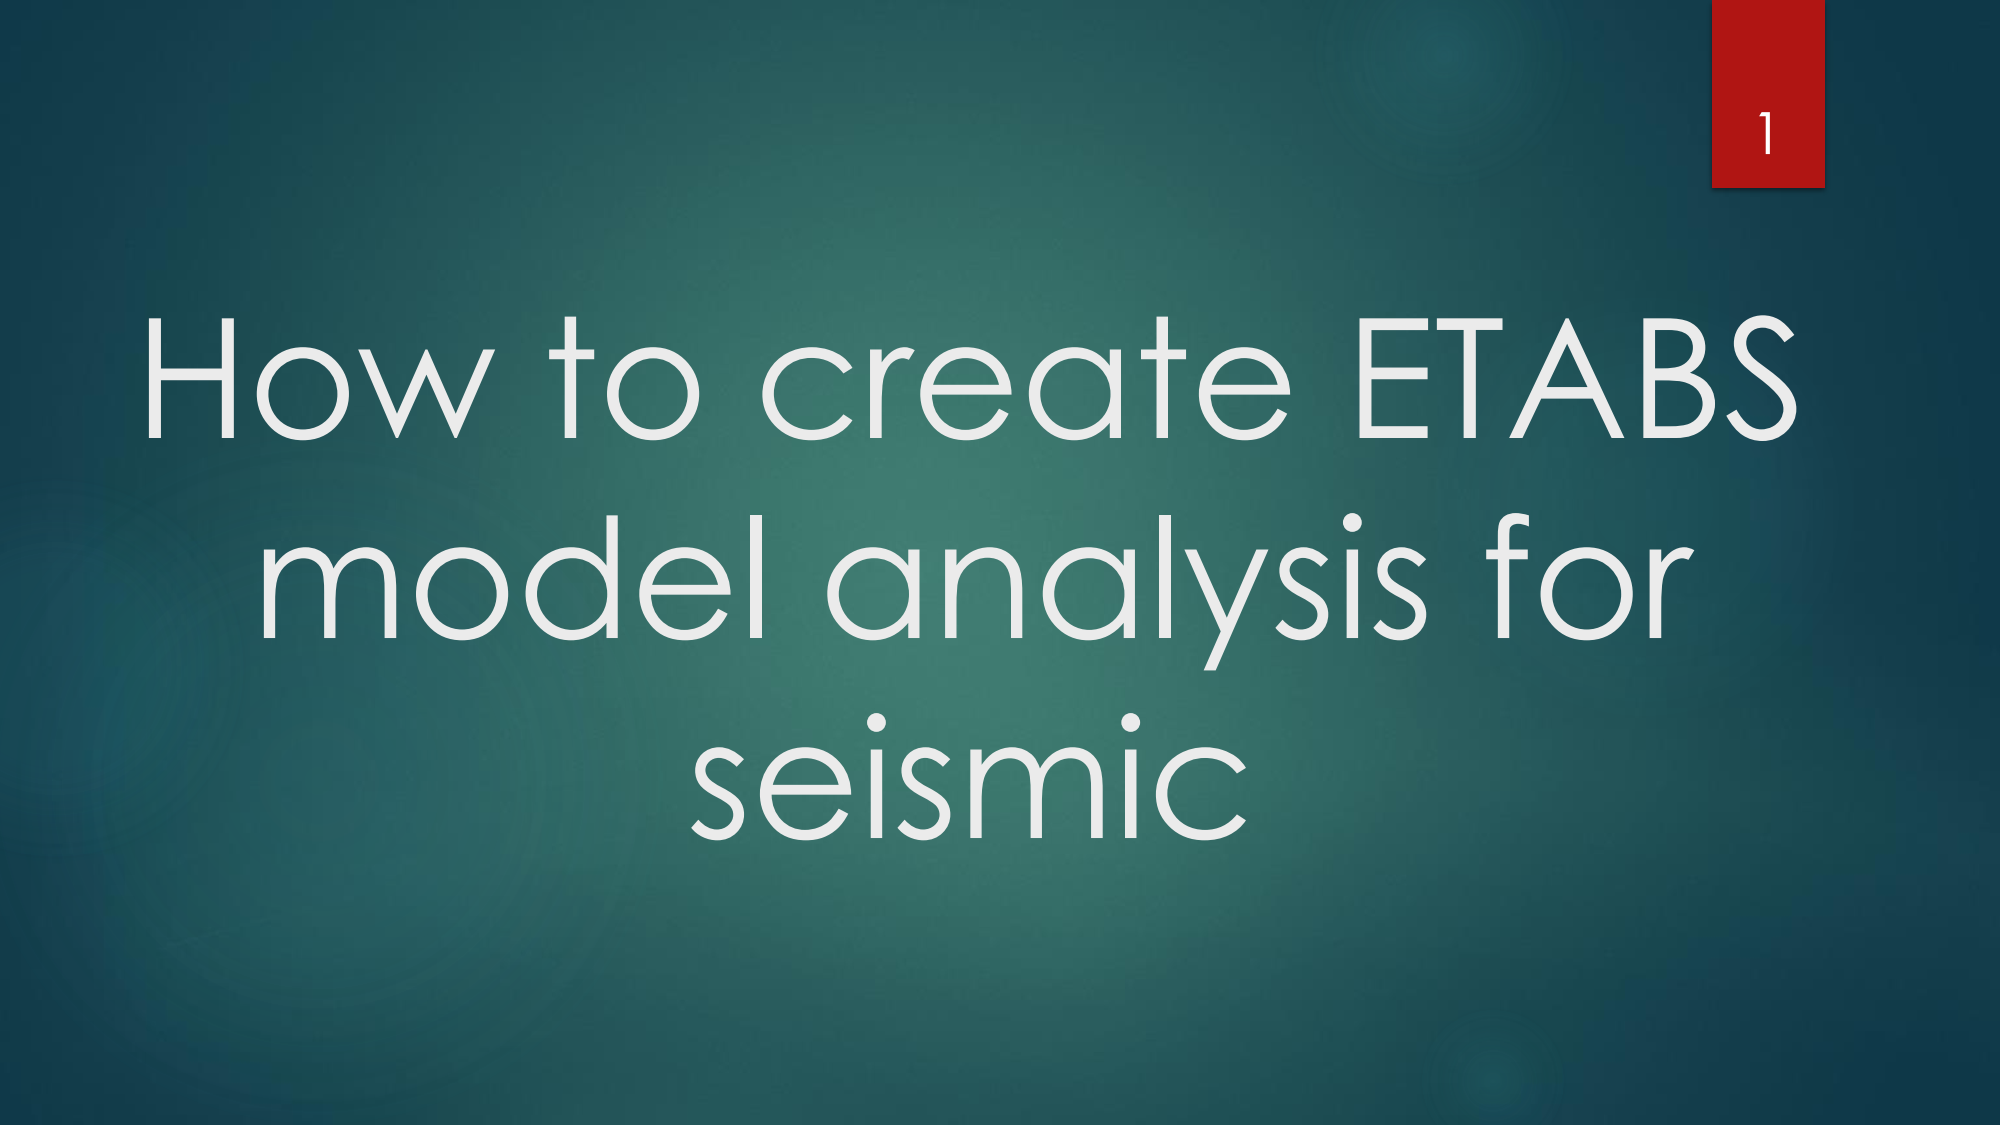 Create ETABS model analysis for seismic